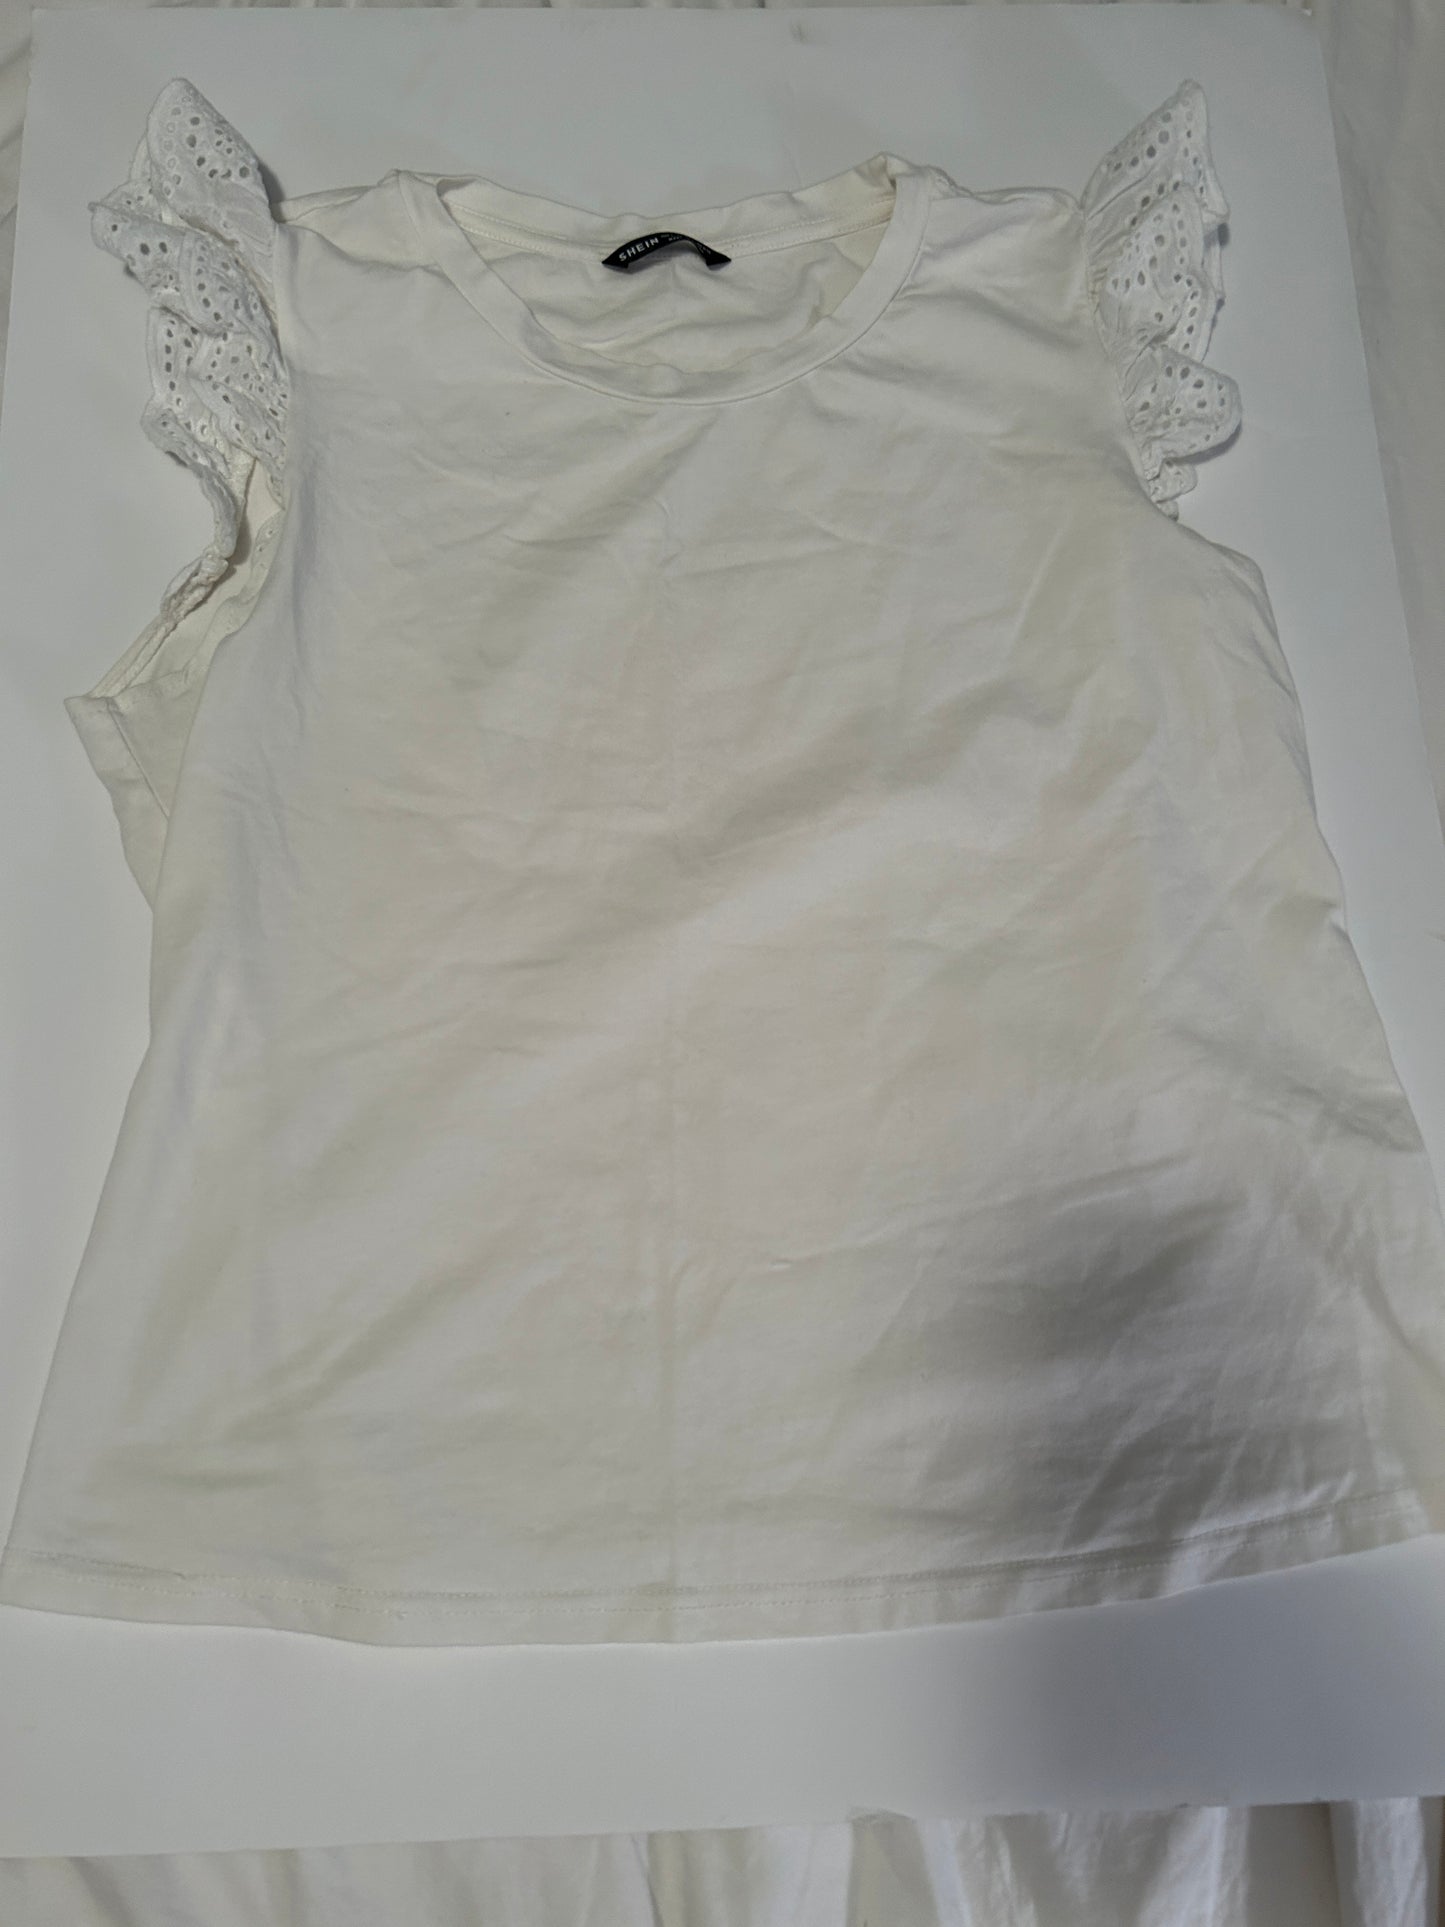 Shein size 8-10 white shirt w/ eyelet flutter sleeves like new 45227